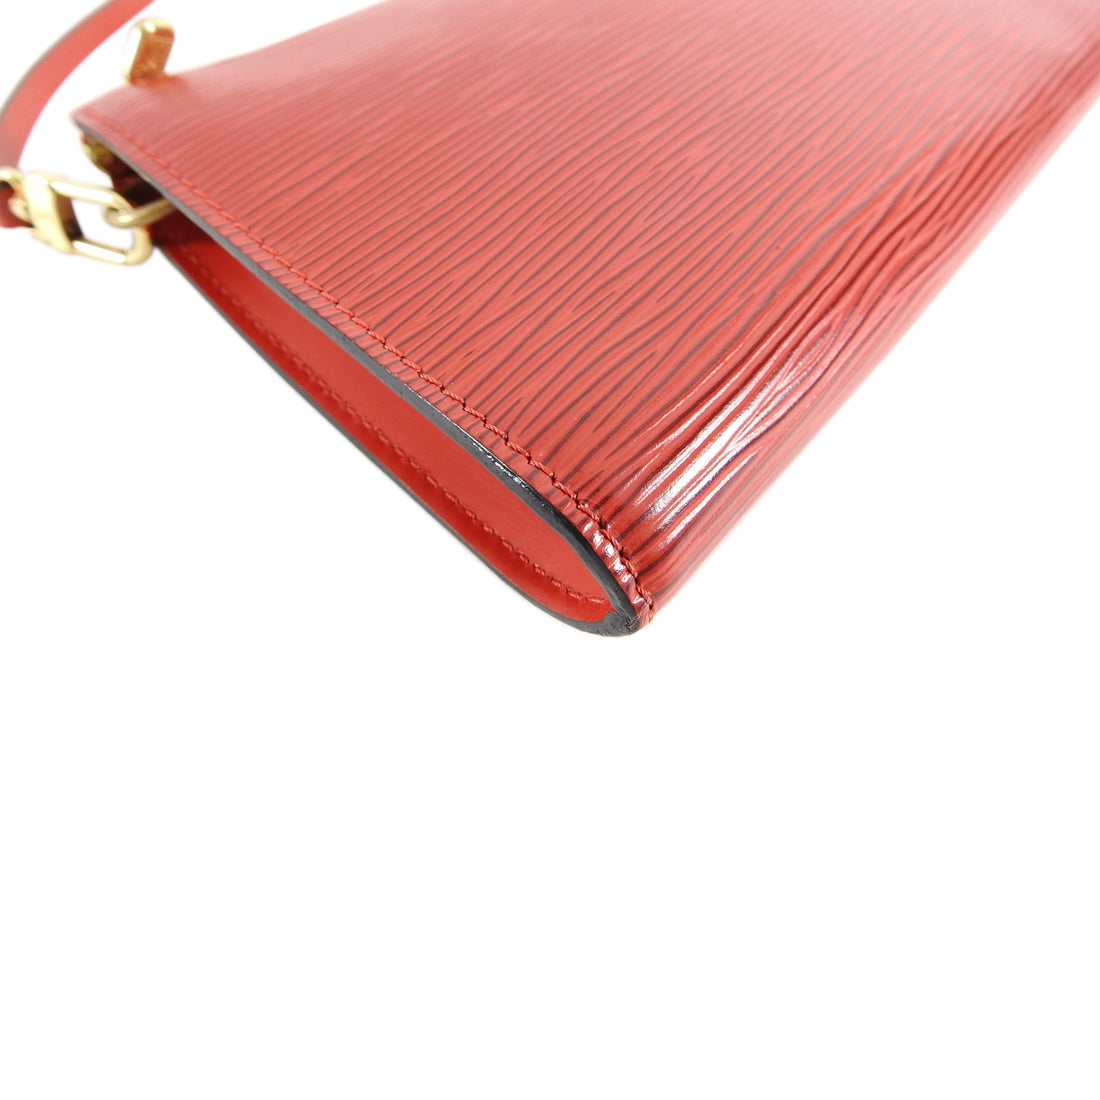 Louis Vuitton Red Epi Leather Small Pochette Bag